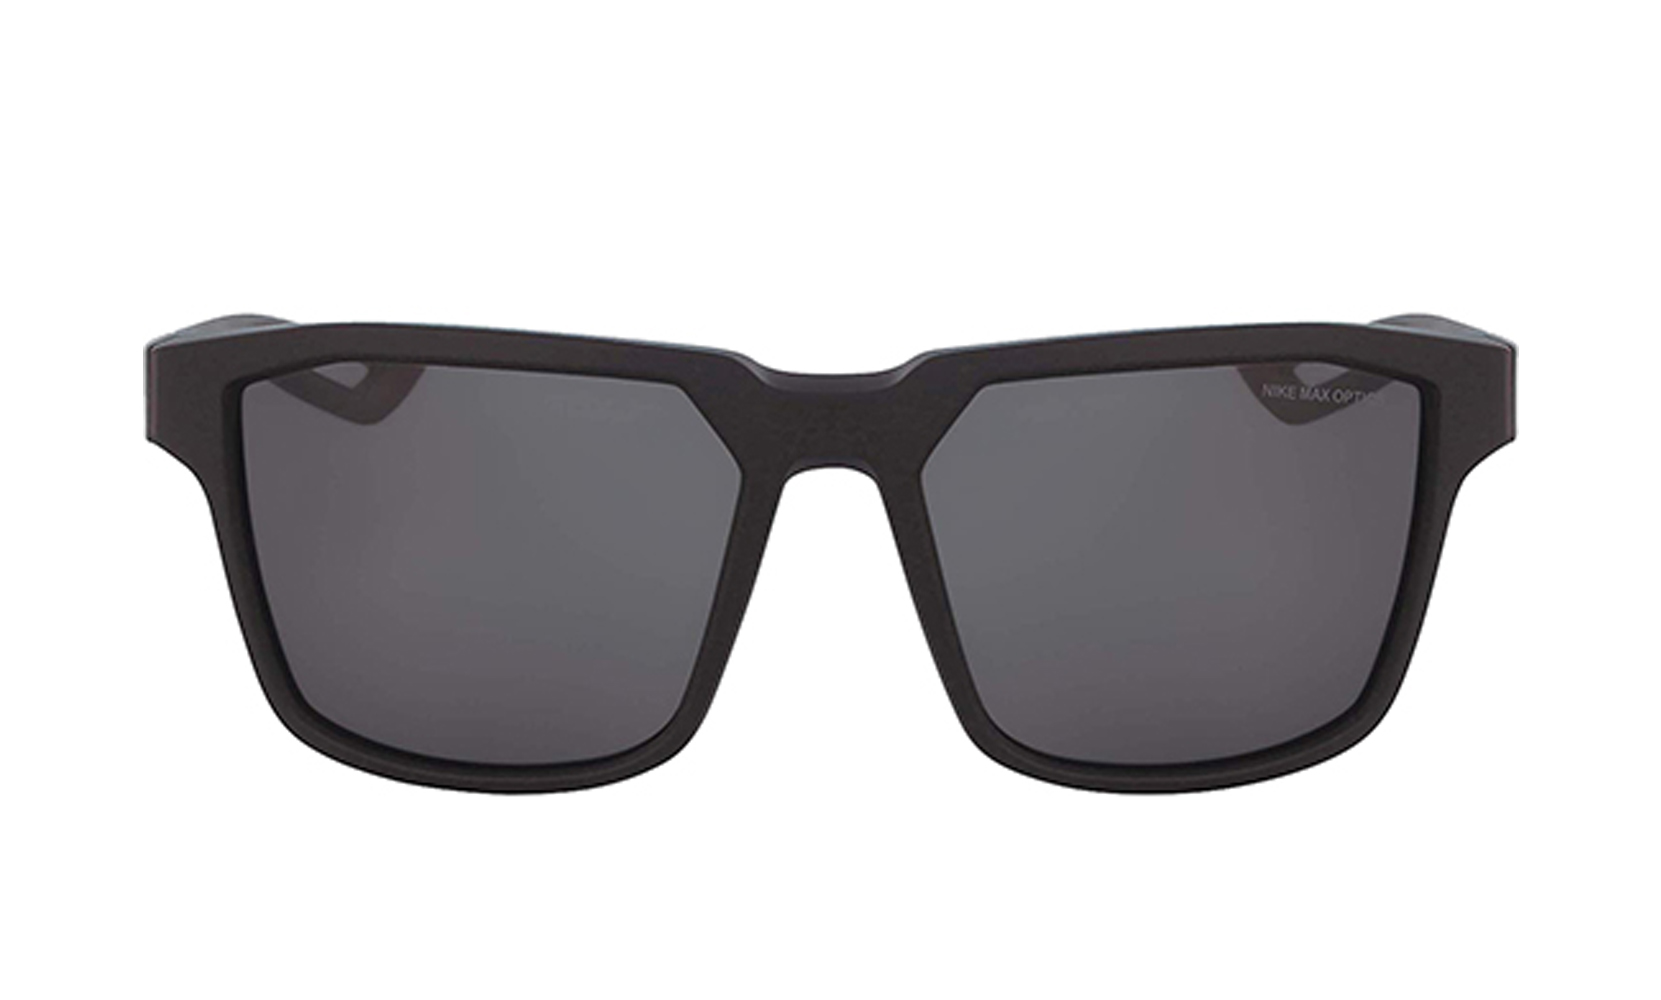 Nike Fleet Men's Matte Oil Grey Classic Square Sunglasses with Max Optics - image 2 of 4